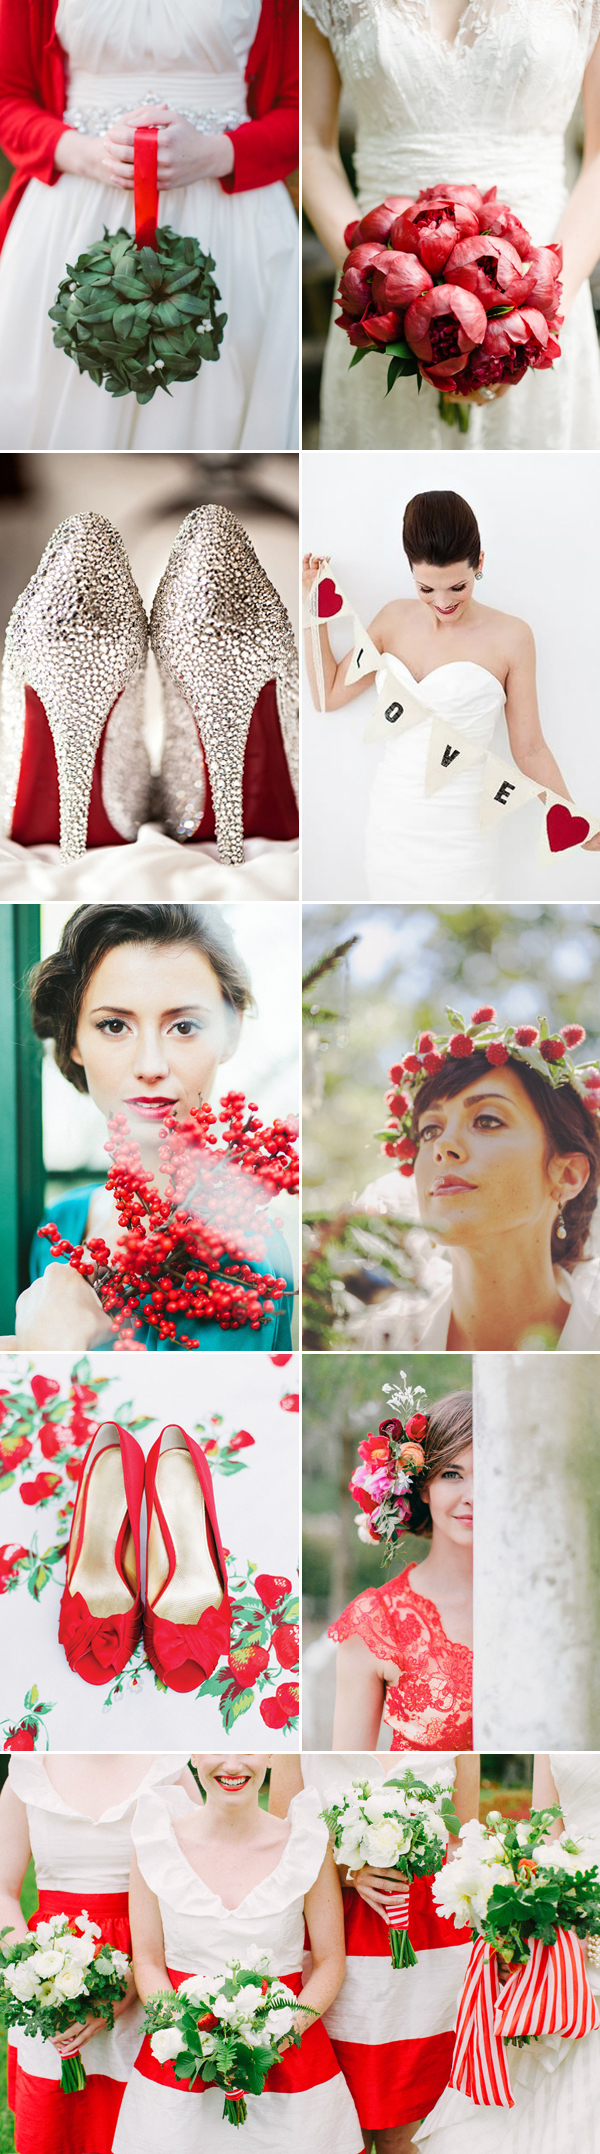 Christmas03-brides